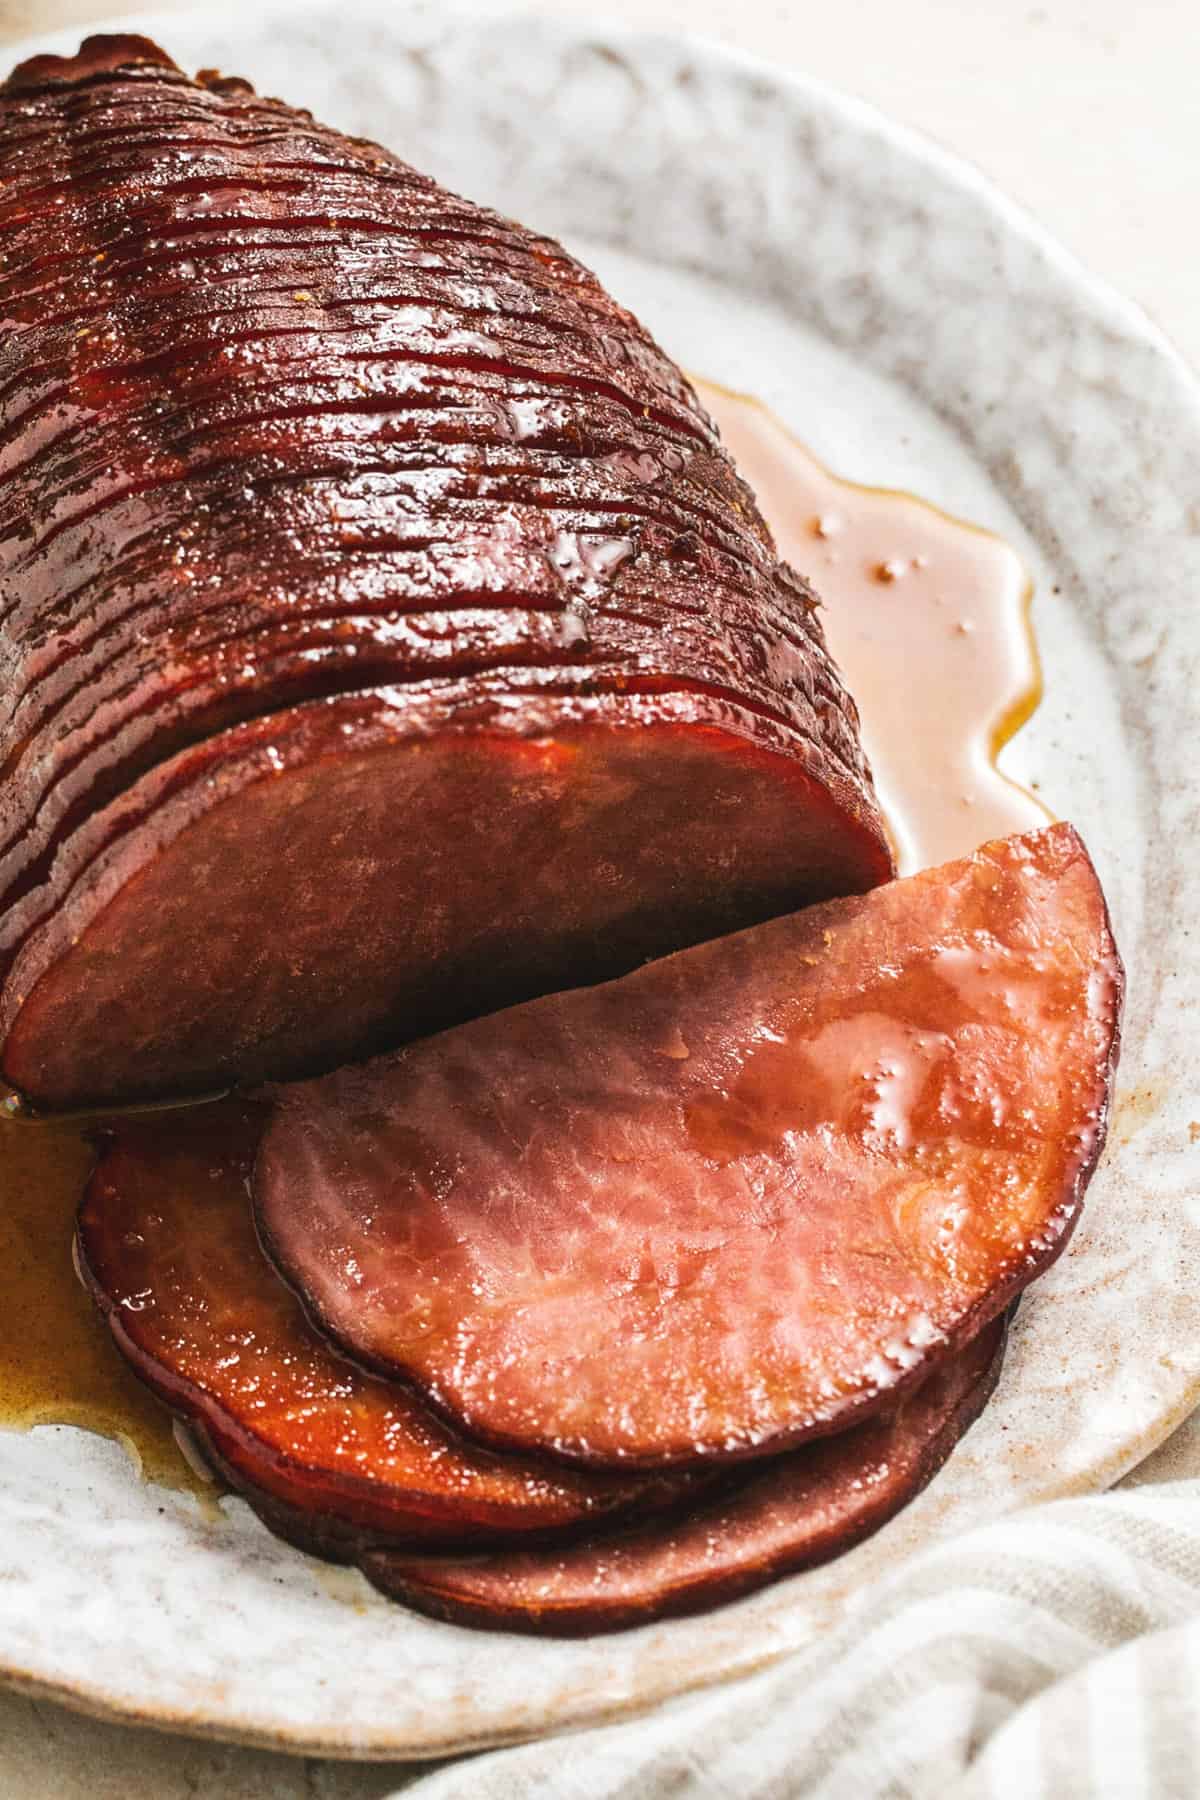 Orange Glazed Ham Recipe, GreenPan